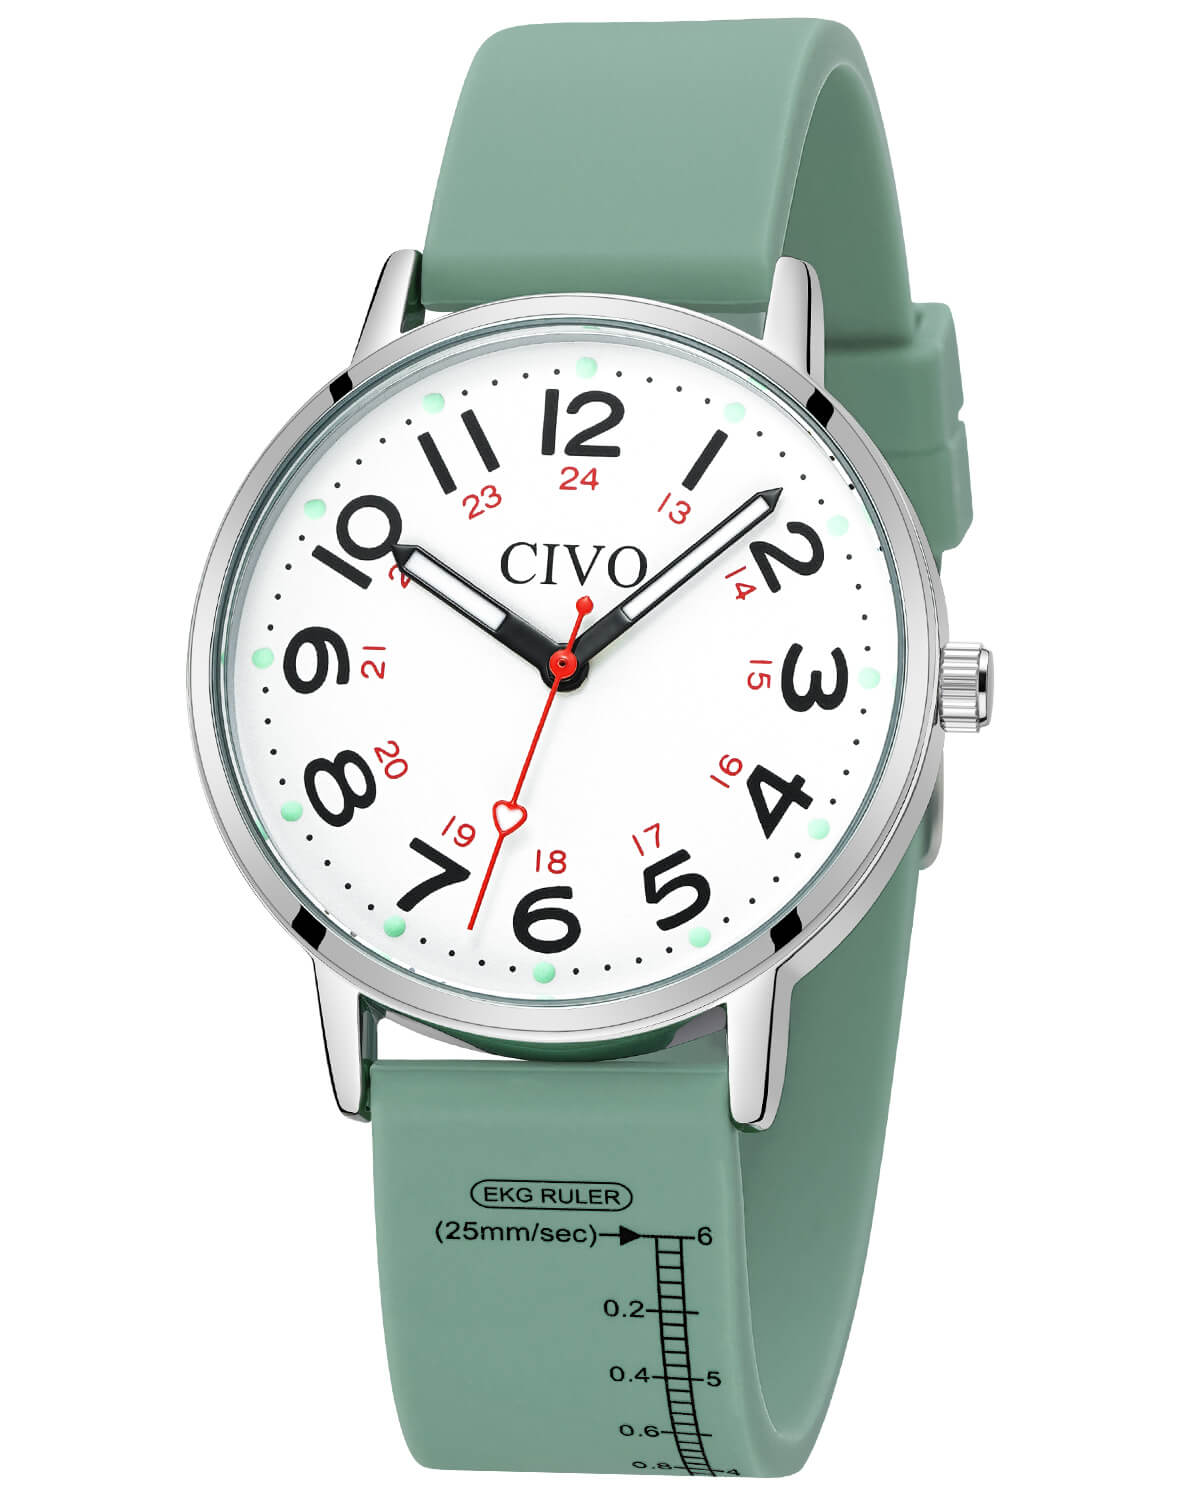 CIVO 8144C-megalith watch